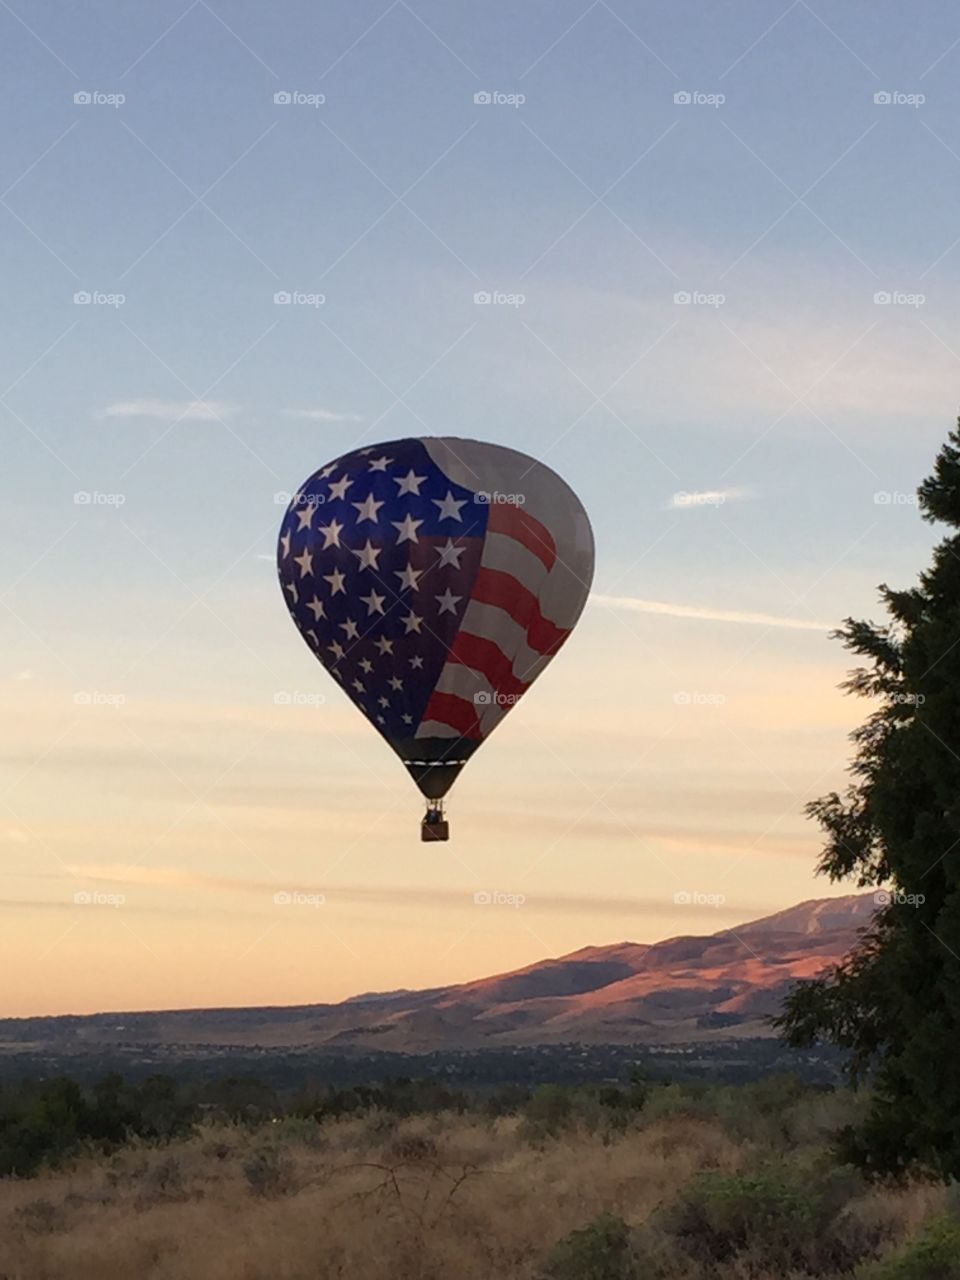 Hot air ballon Fest. Patriotic American flag ballon.